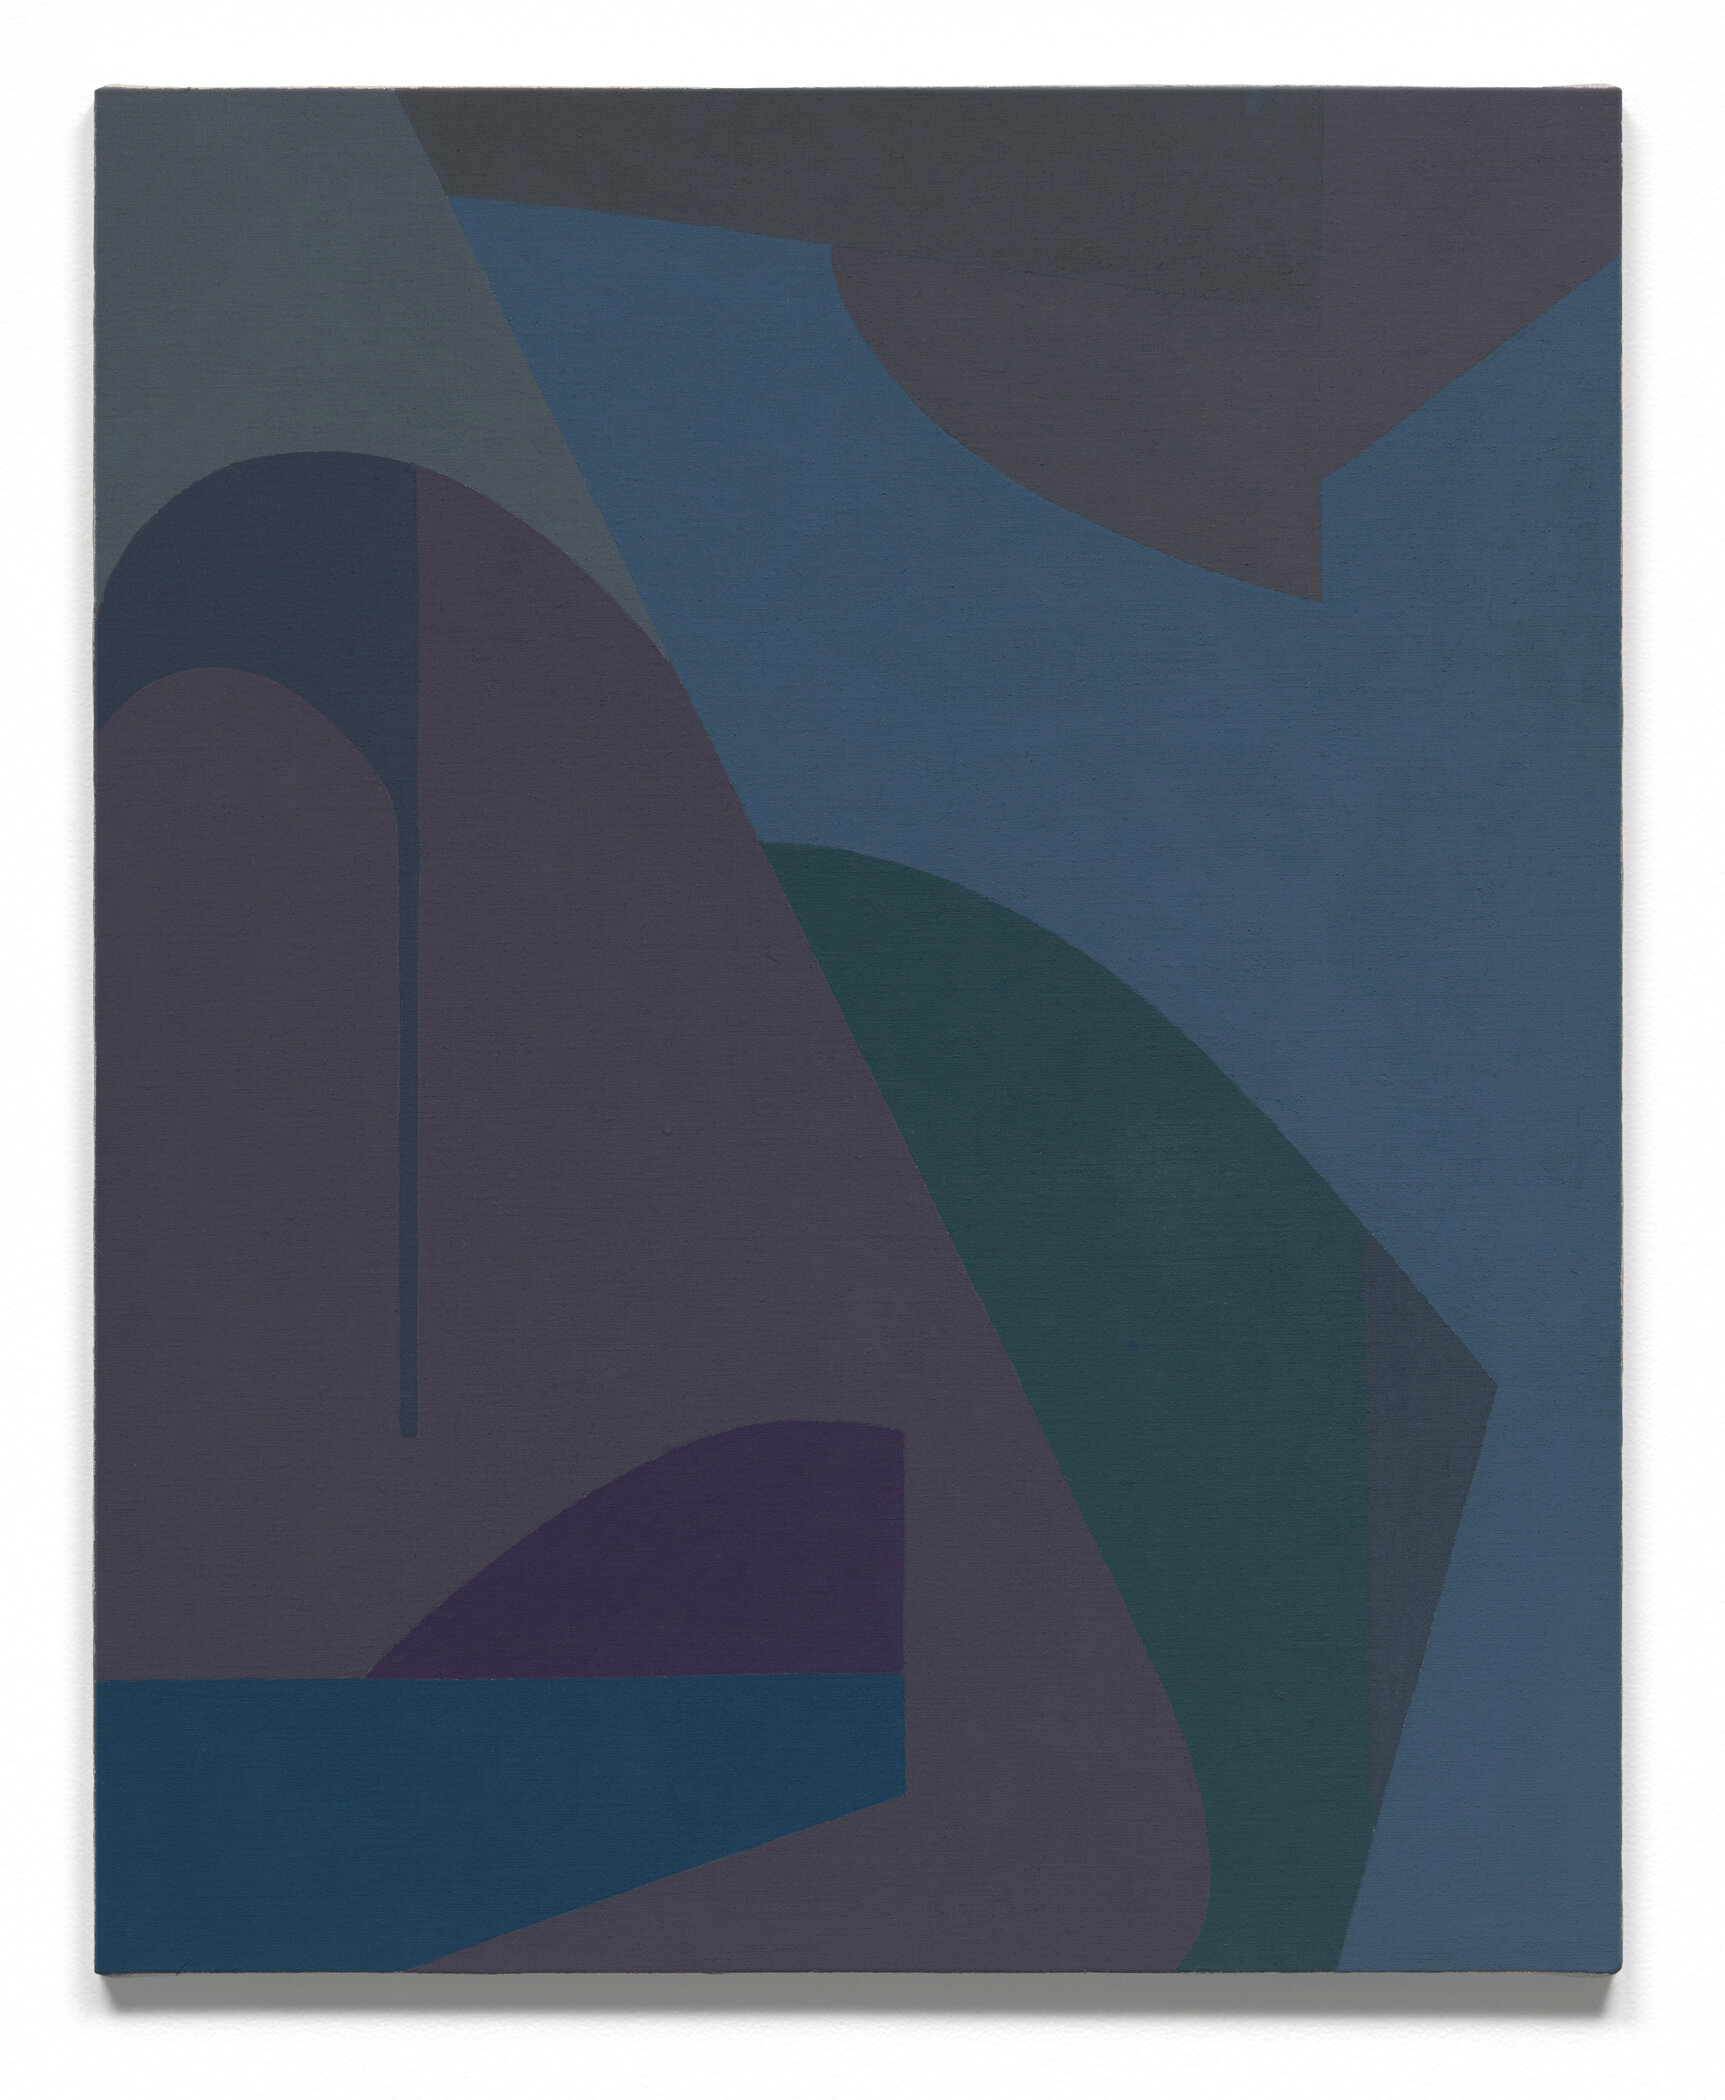  NANCY WHITE  Untitled (1-2019) , 2019 acrylic on linen mounted to panel 16 x 13" x 3/8" 